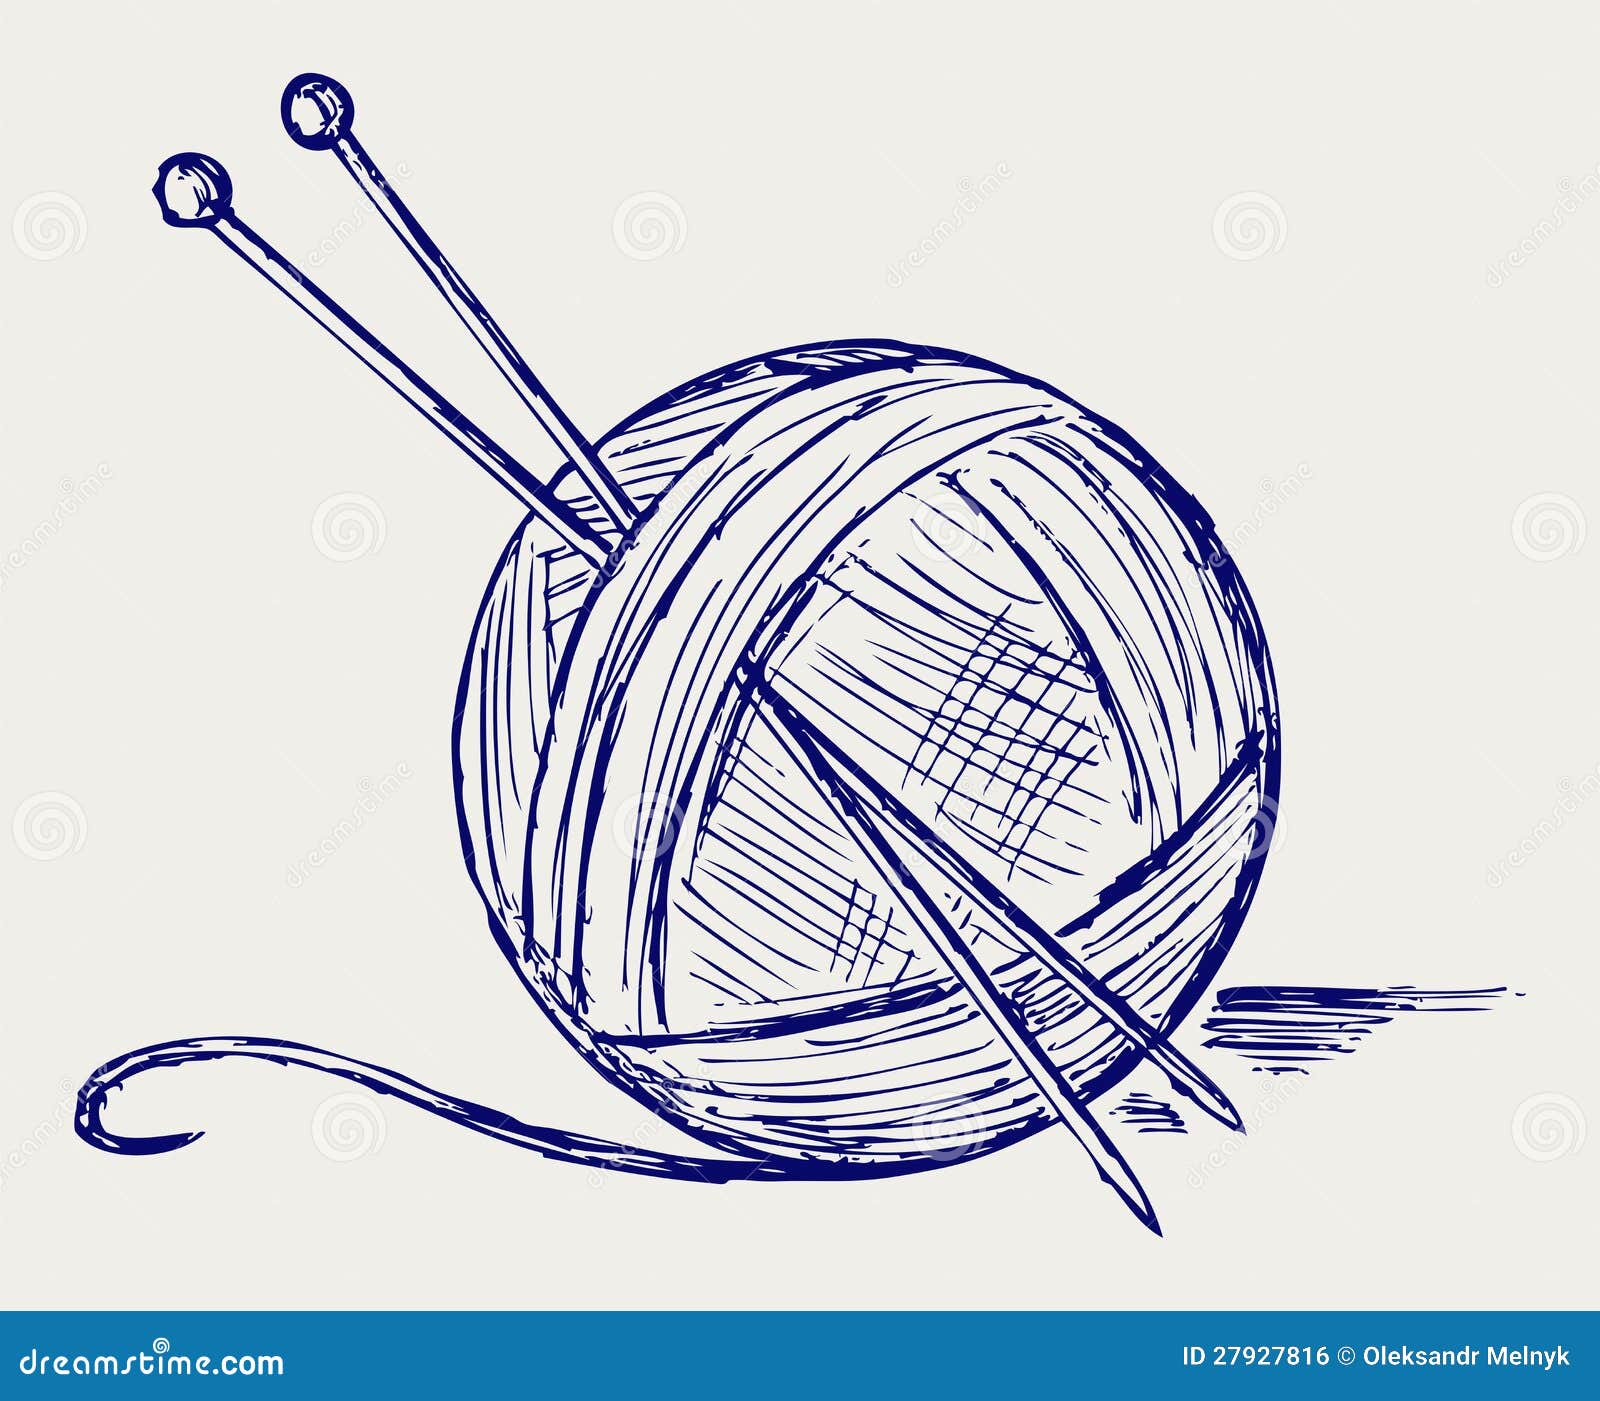 knitting needles and yarn clip art - photo #46